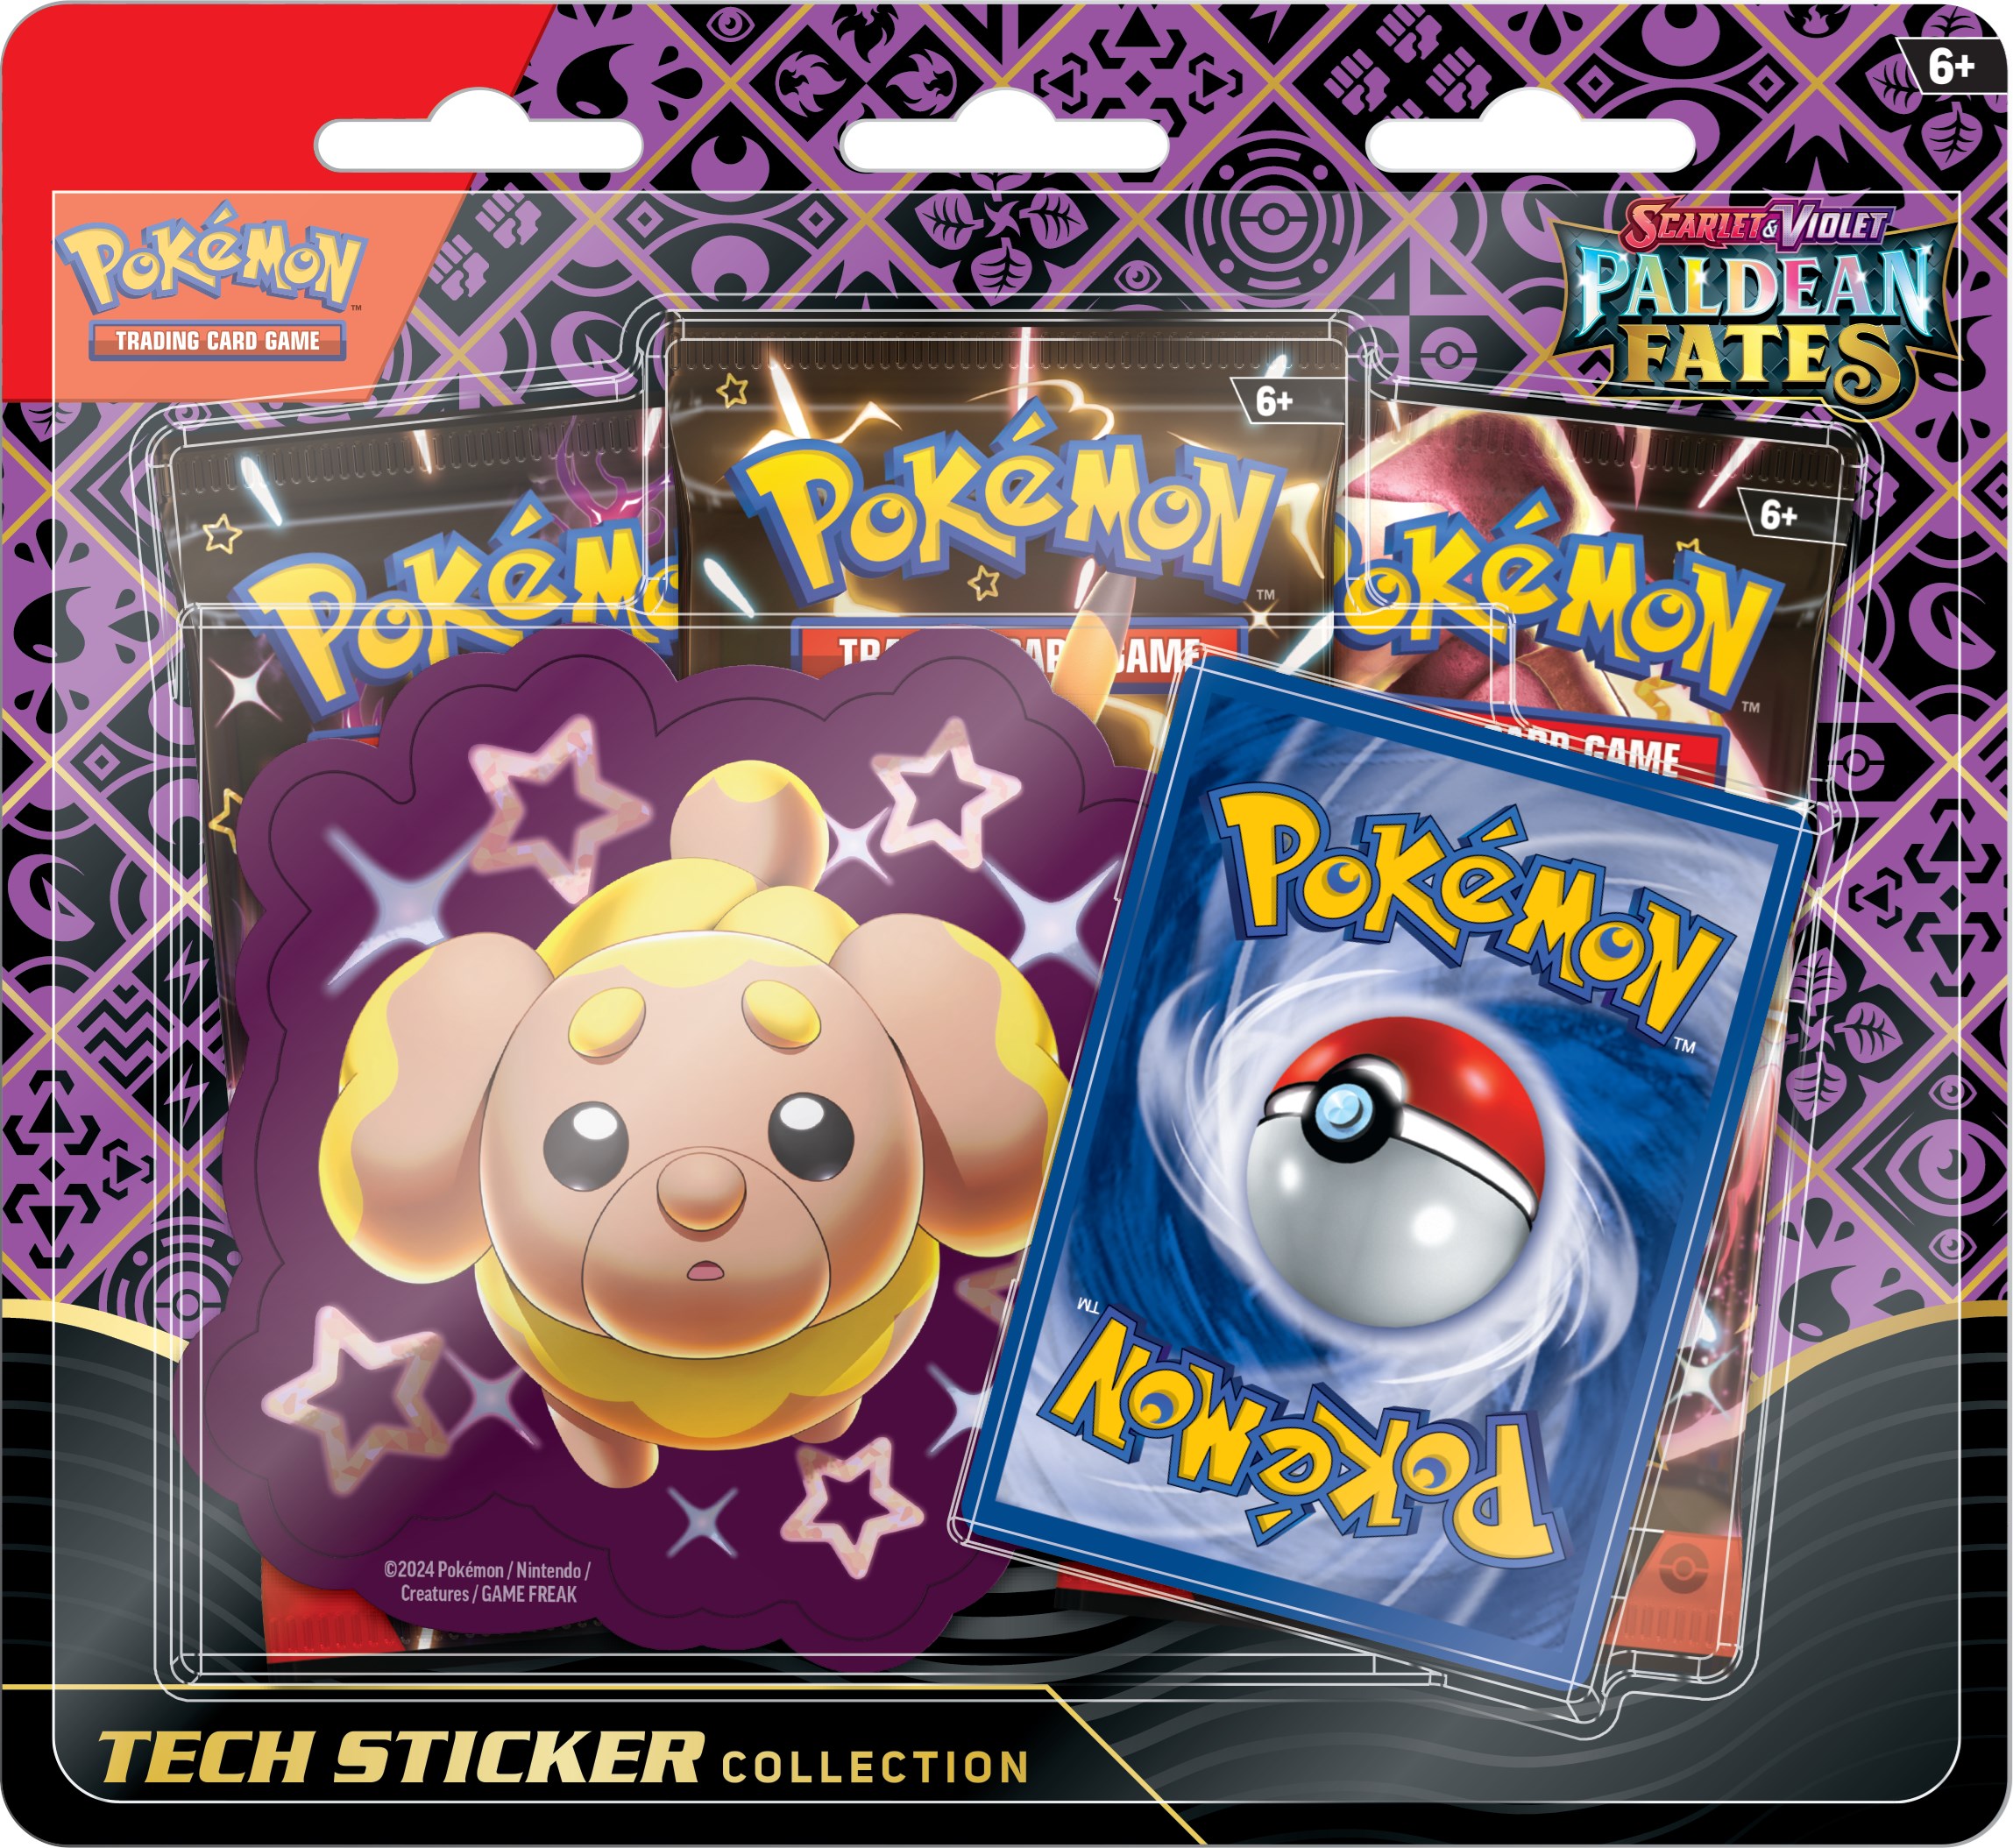 Pokemon TCG Scarlet Violet%E2%80%94Paldean Fates Tech Sticker Collection Fidough png jpgcopy